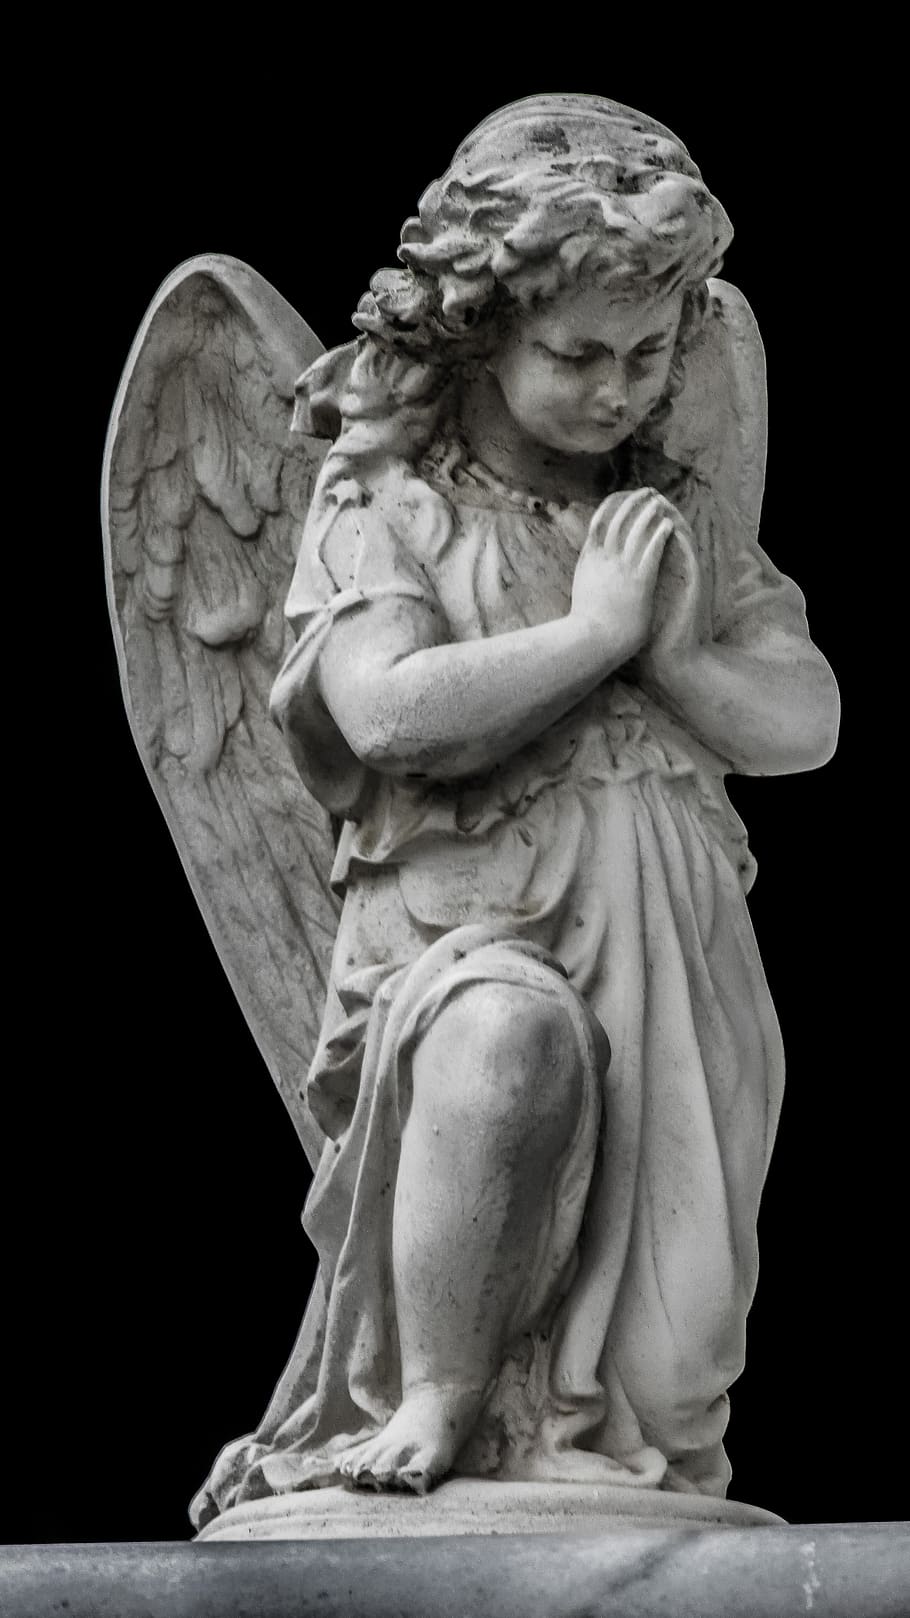 Little Praying Angel, representation, emotion, angelic, spirituality